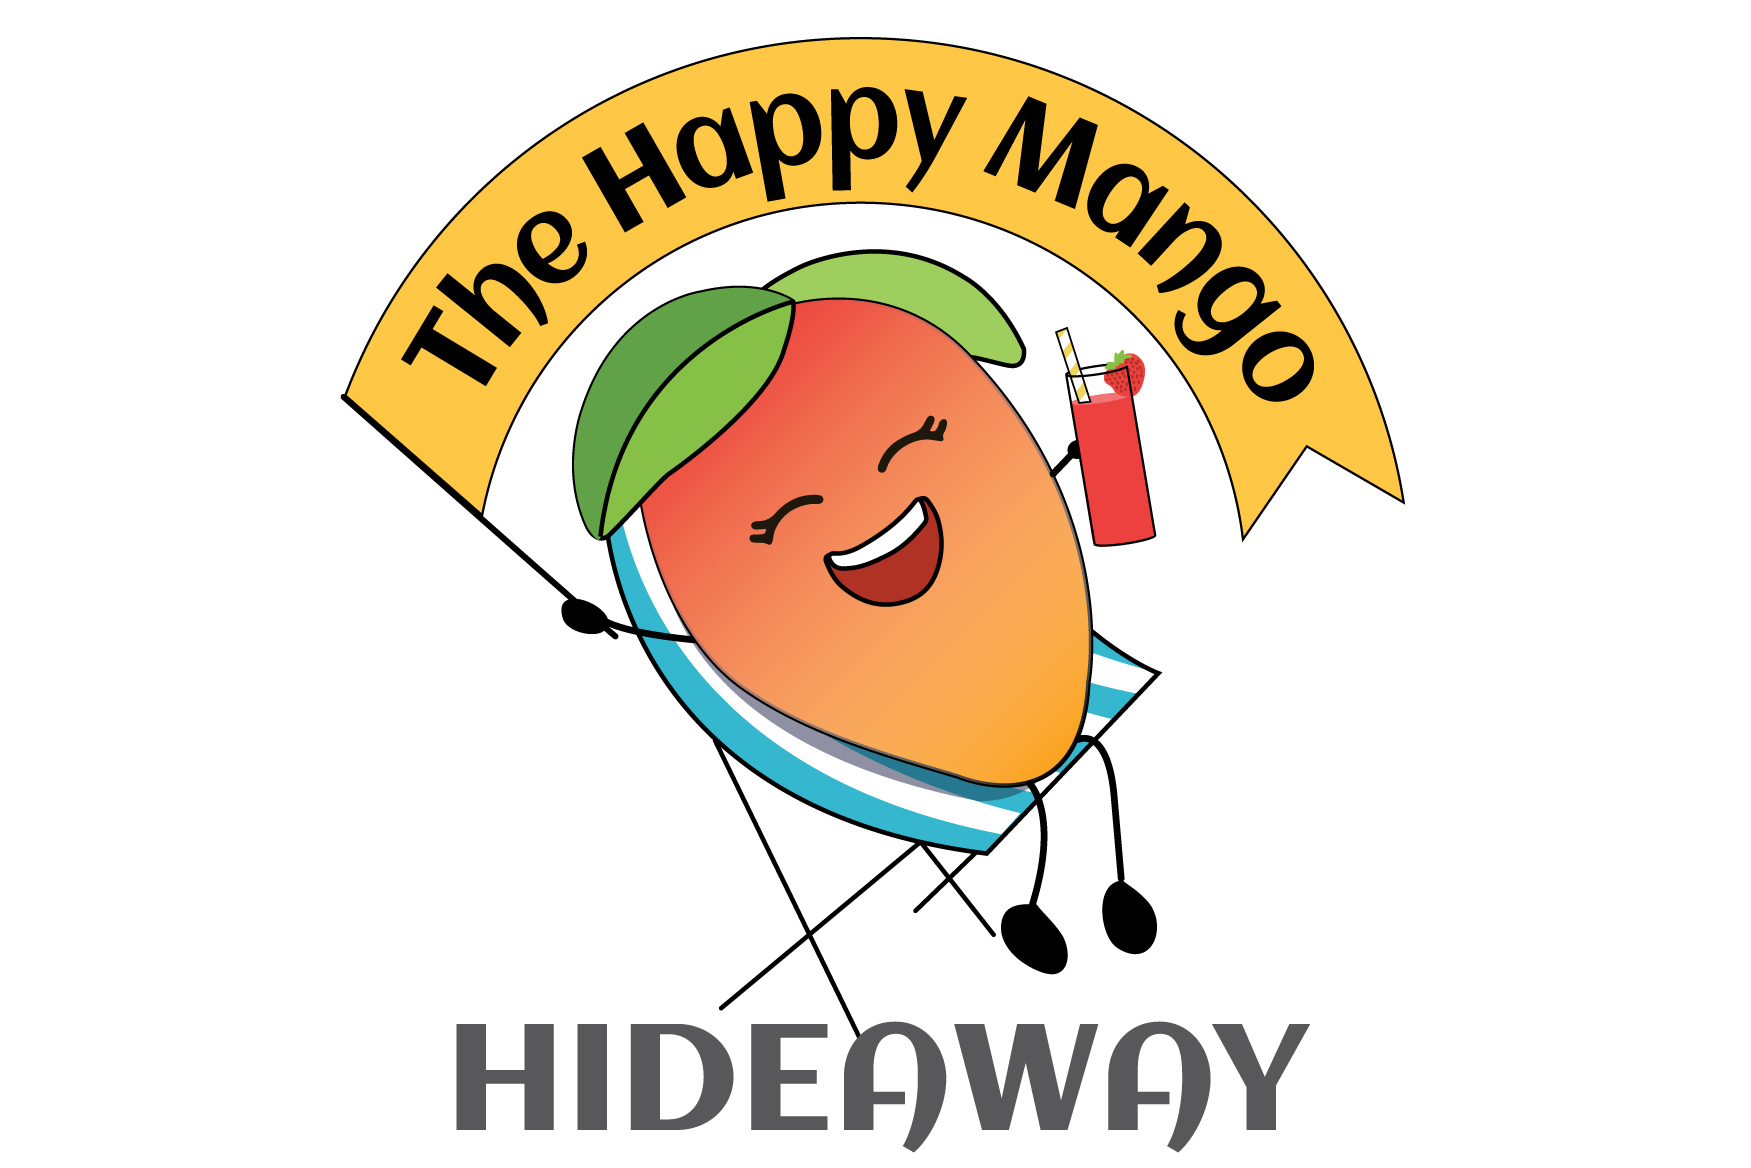 happyMango Hideaway logo